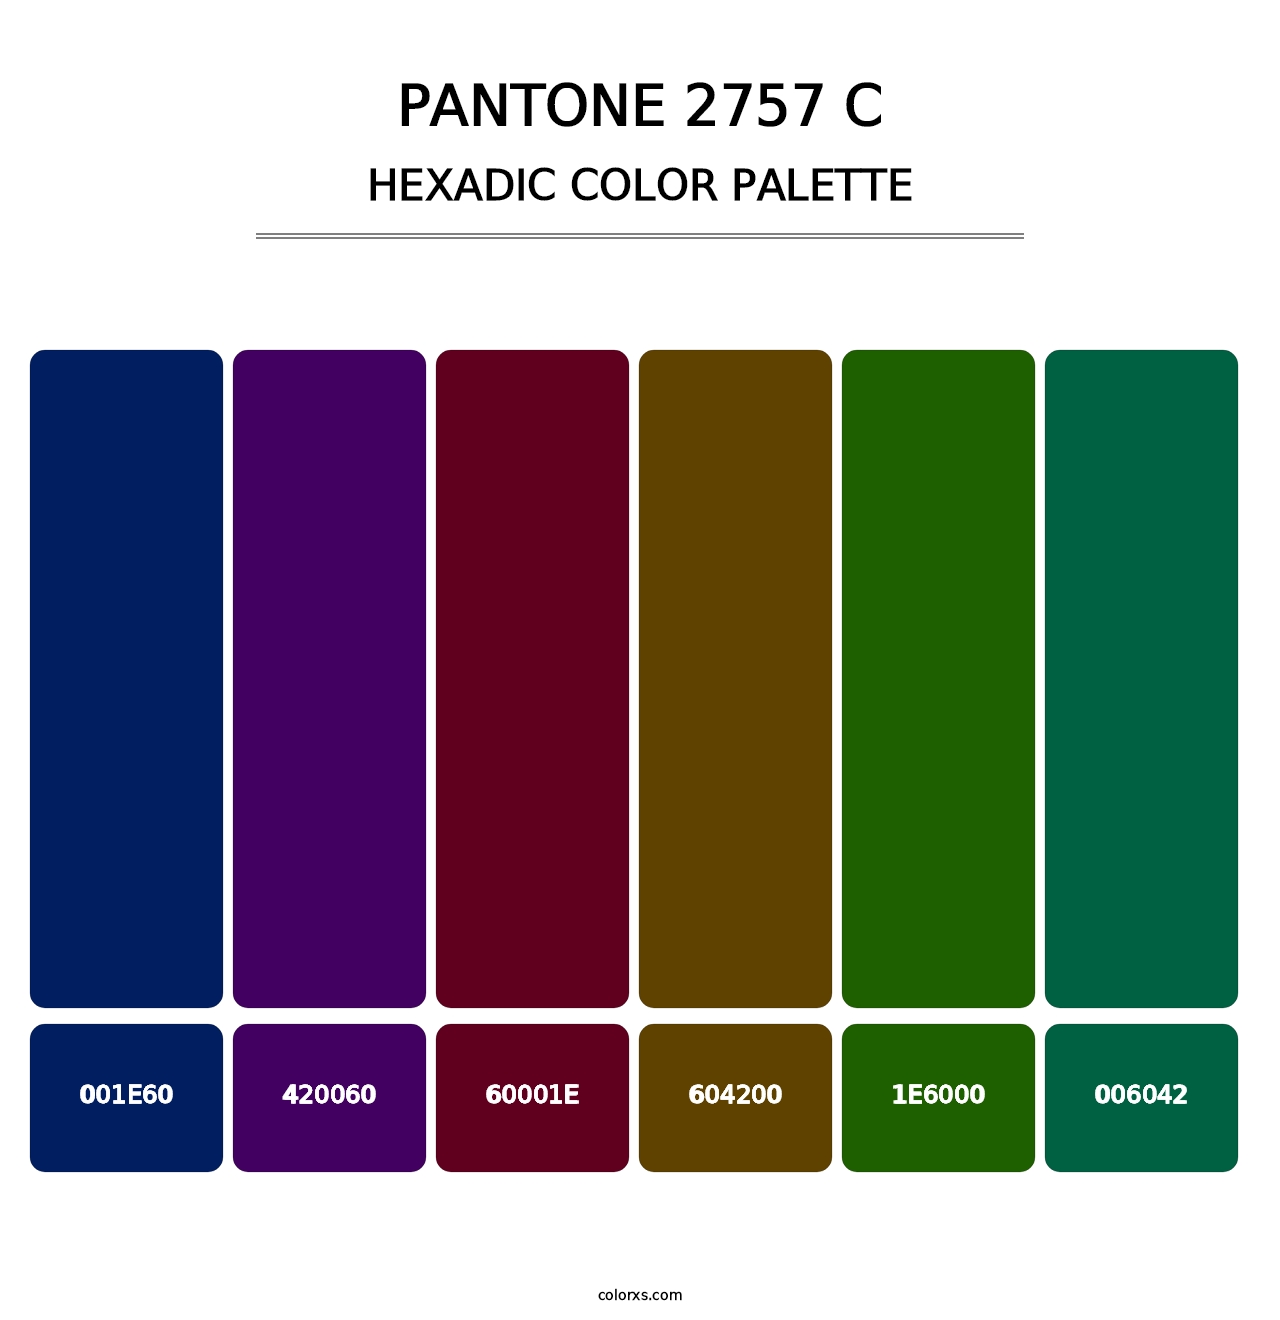 PANTONE 2757 C - Hexadic Color Palette